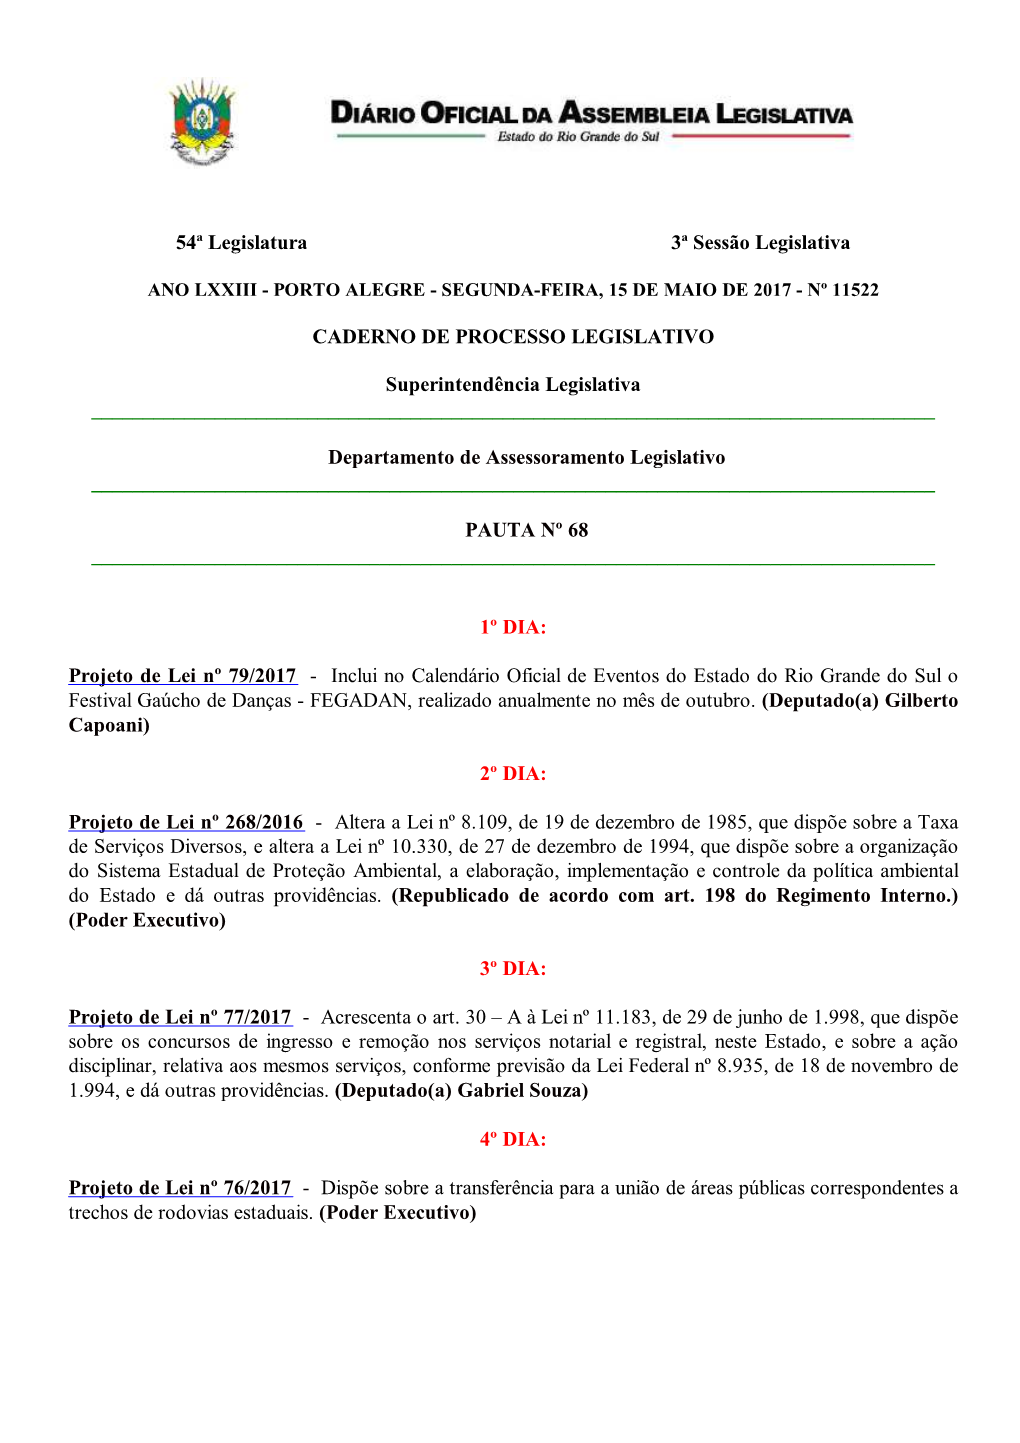 54ª Legislatura 3ª Sessão Legislativa CADERNO DE PROCESSO LEGISLATIVO Superintendência Legislativa